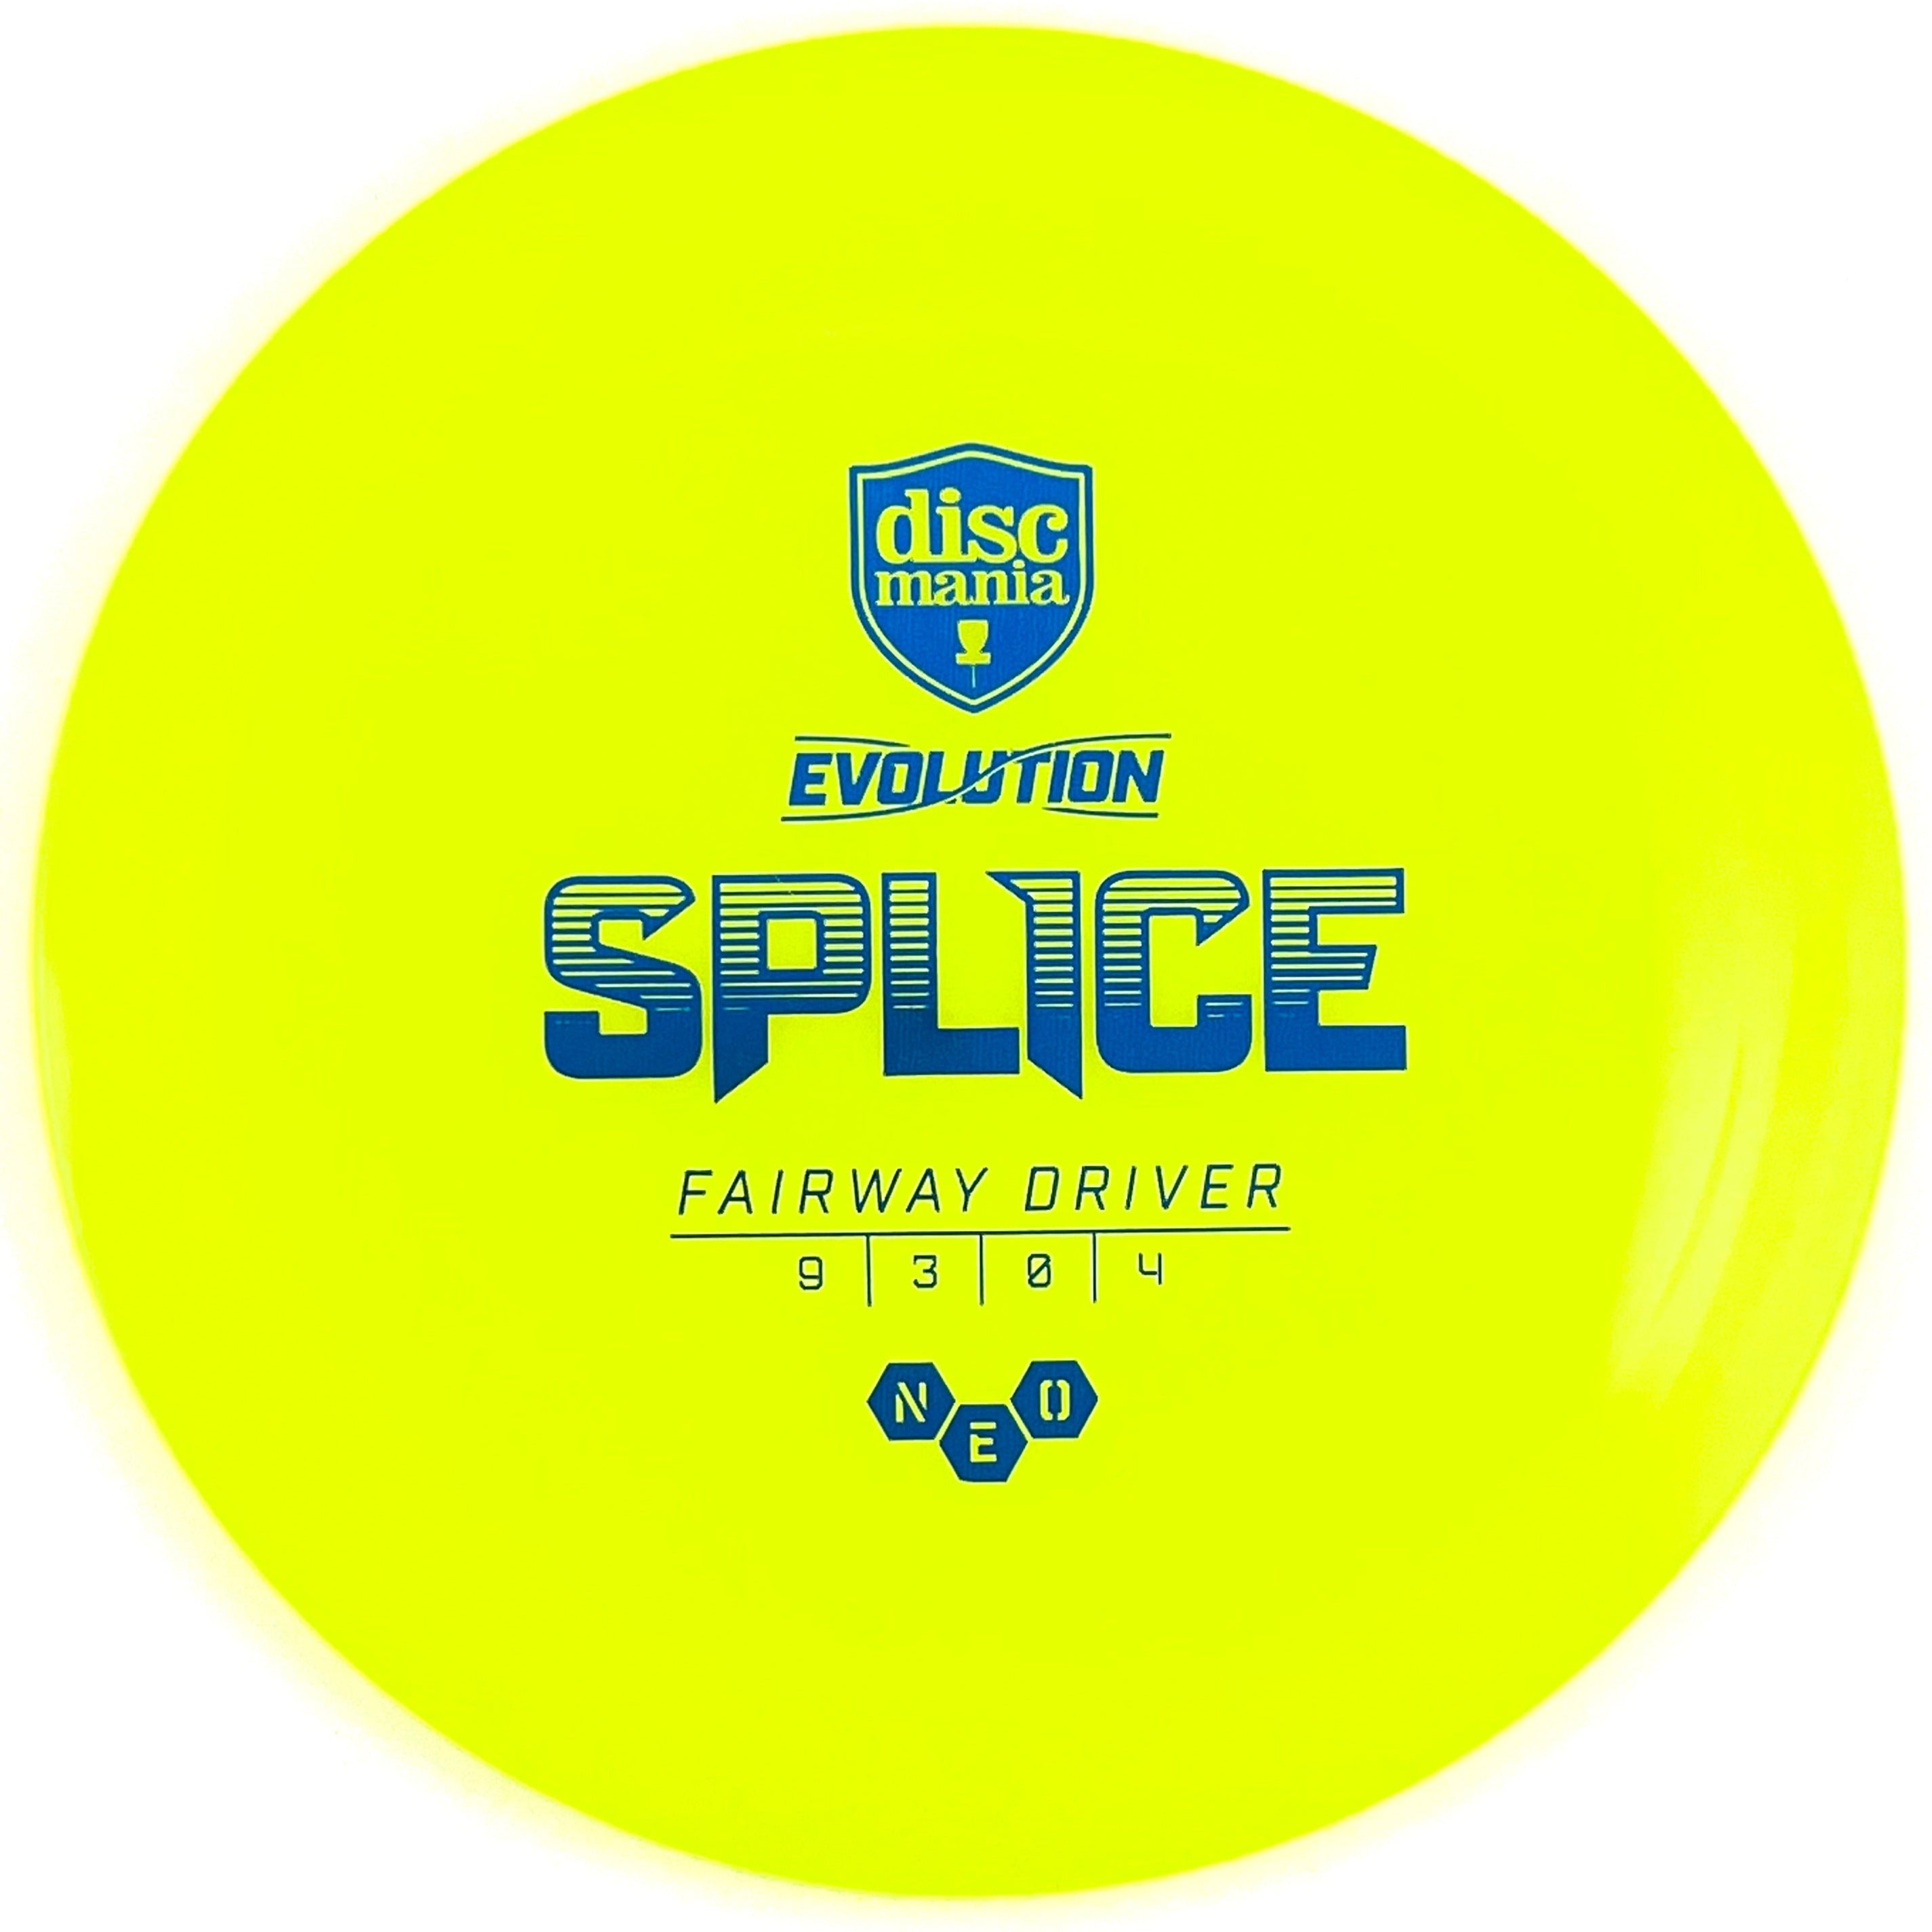 Discmania Splice disc golf utility fairway driver by Discmania Golf Discs.